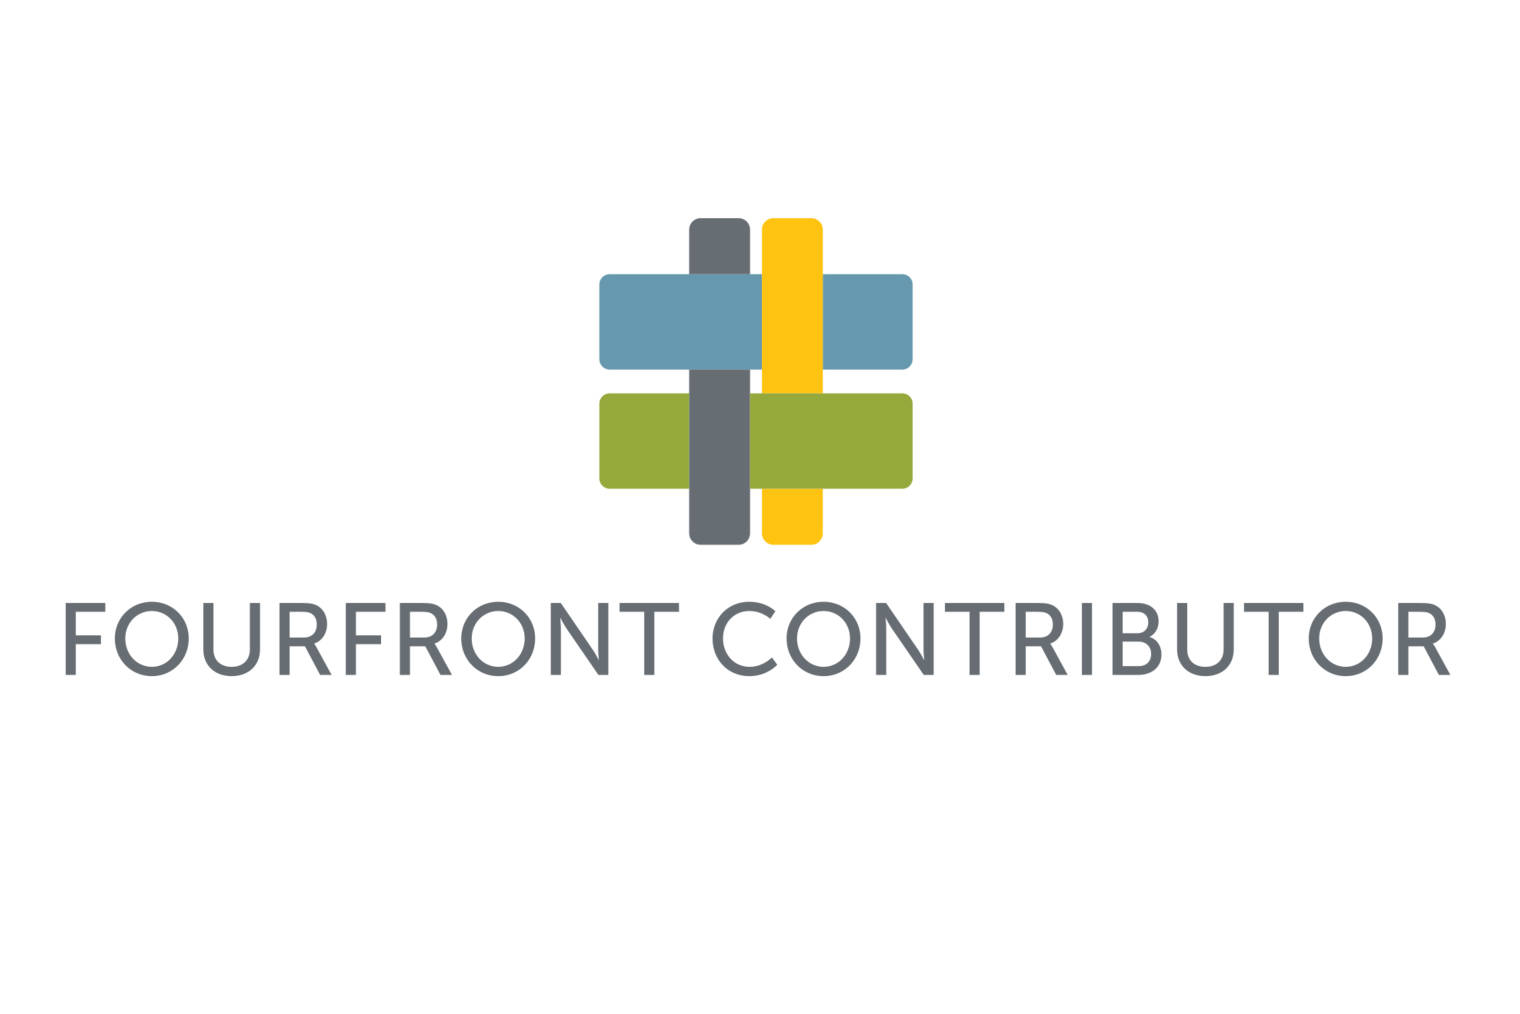 Fourfront Contributor logo.